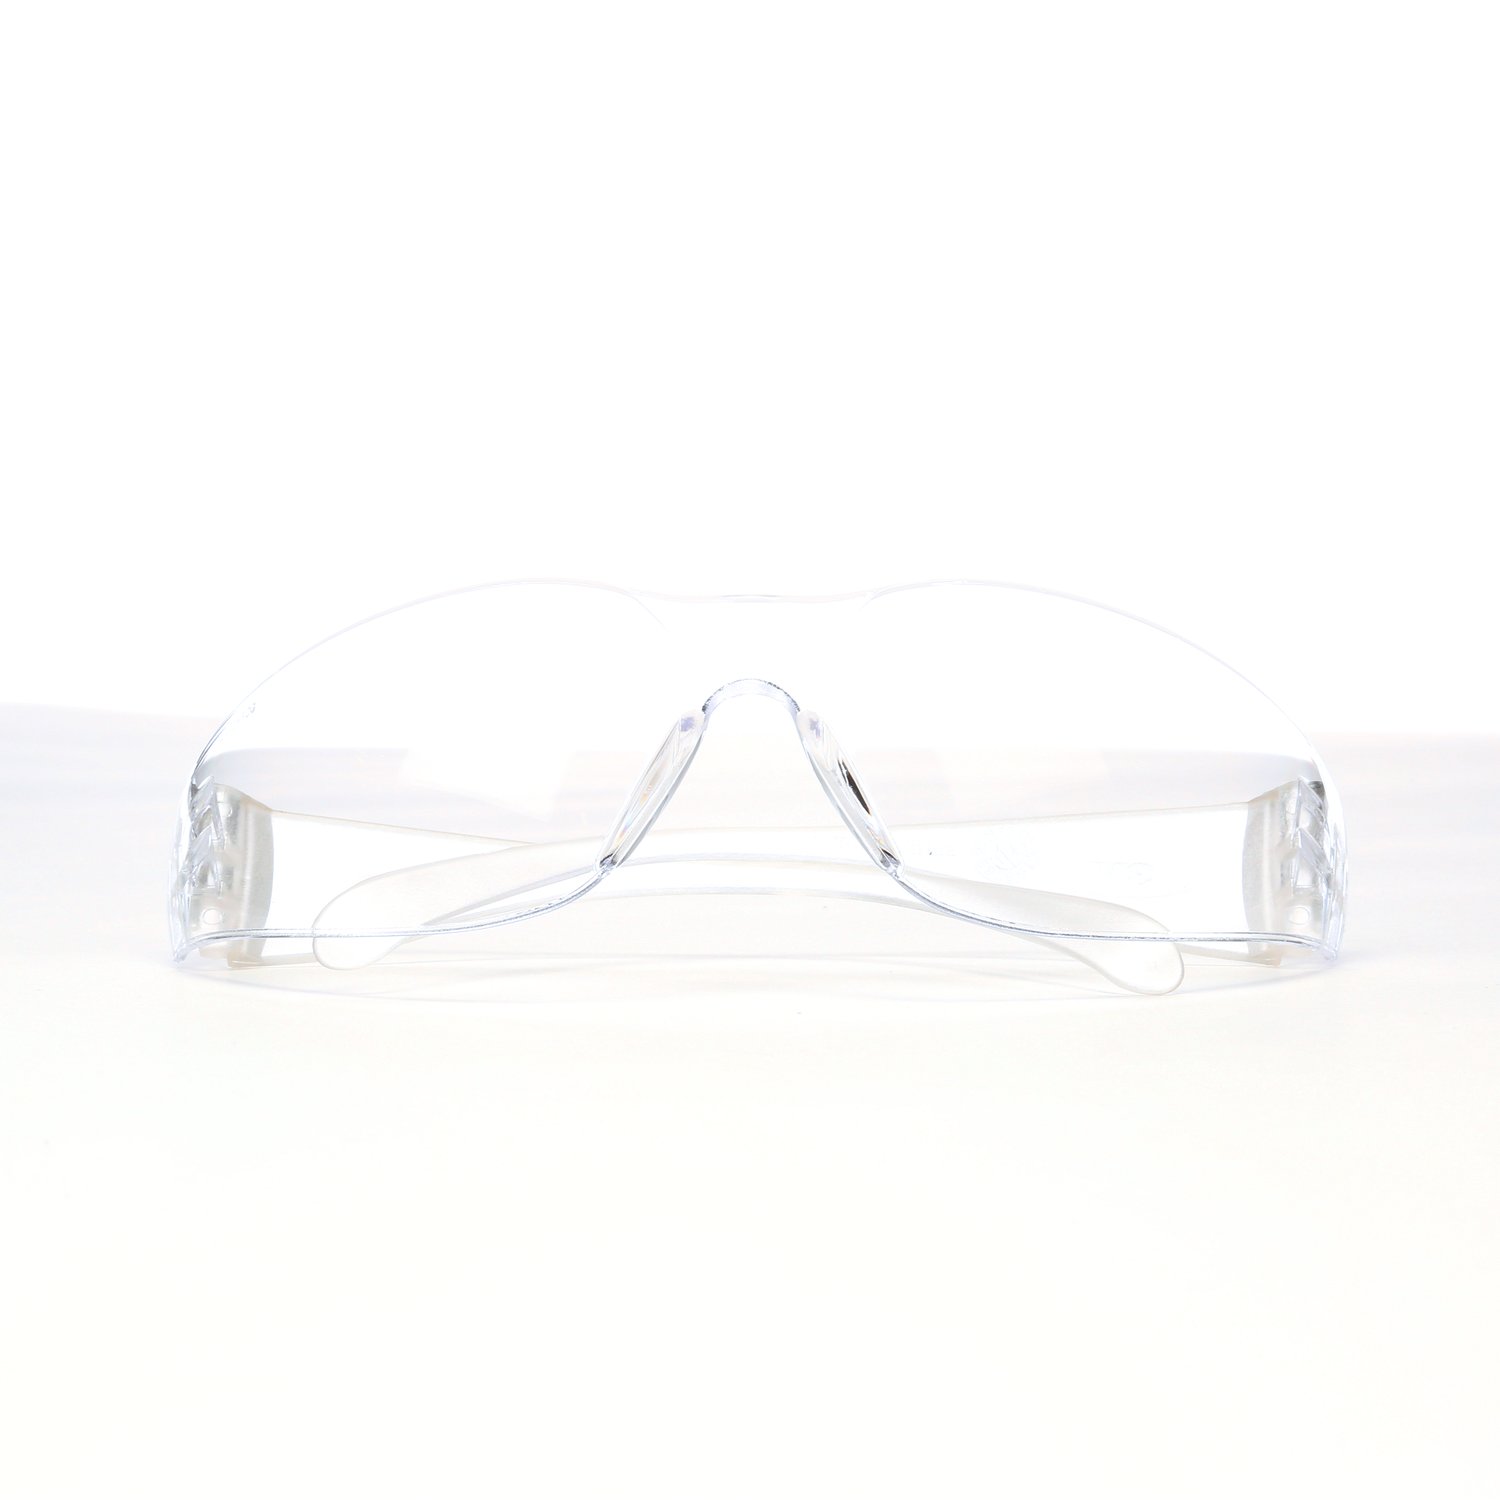 7010315357 - 3M Virtua Protective Eyewear 11329-00000-100 Clear Temples Clear
Anti-Fog Lens, 100 EA/Case